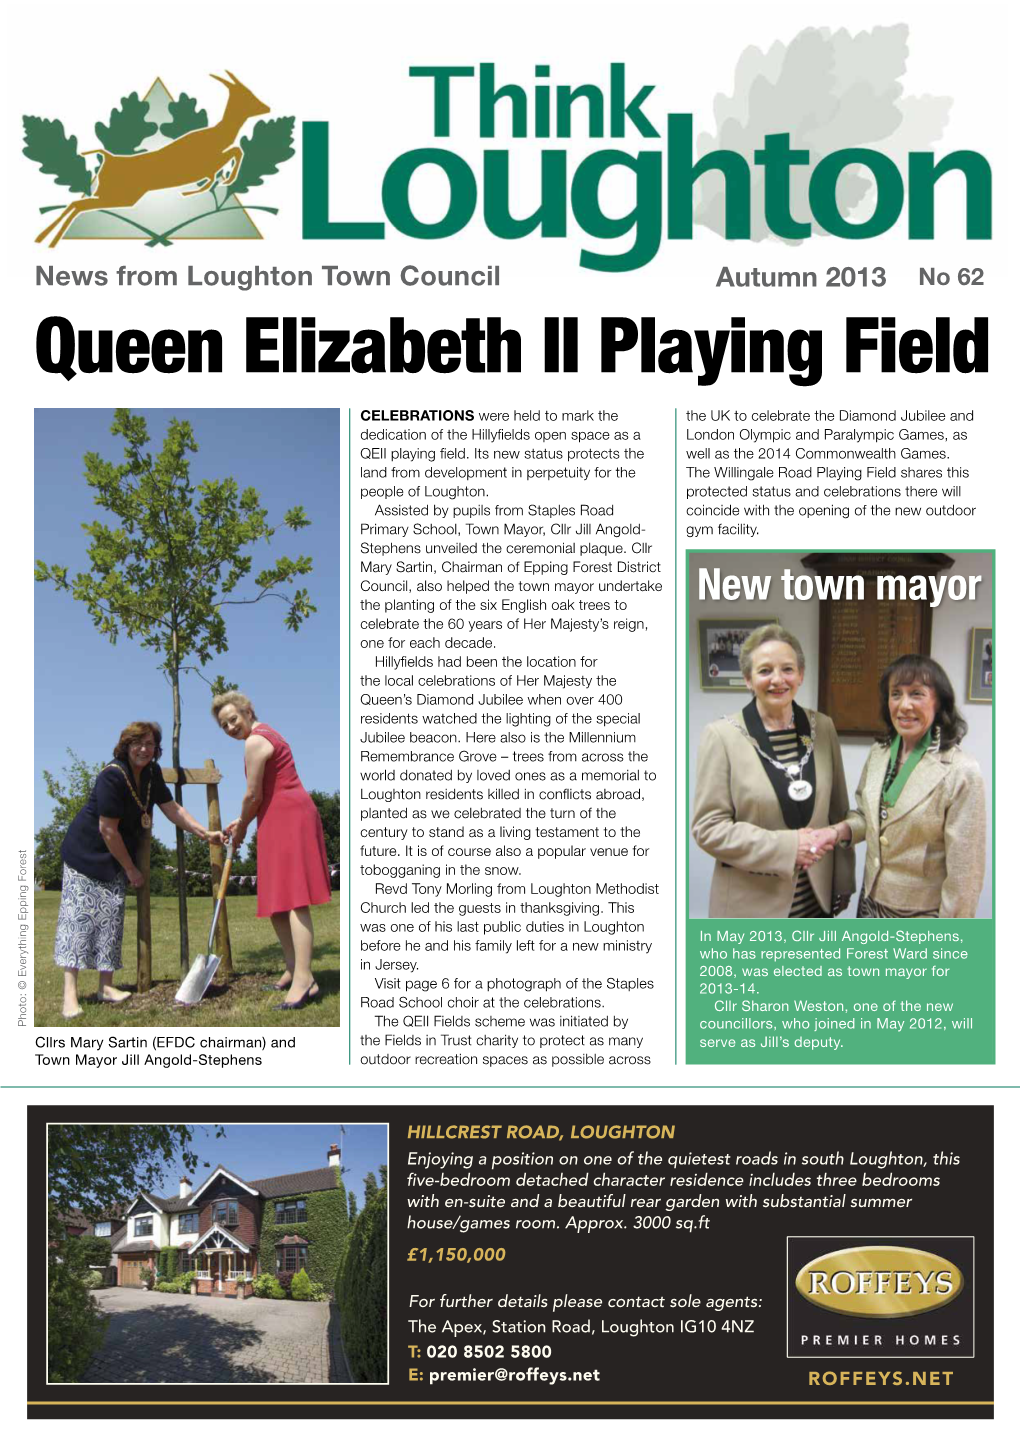 Queen Elizabeth II Playing Field